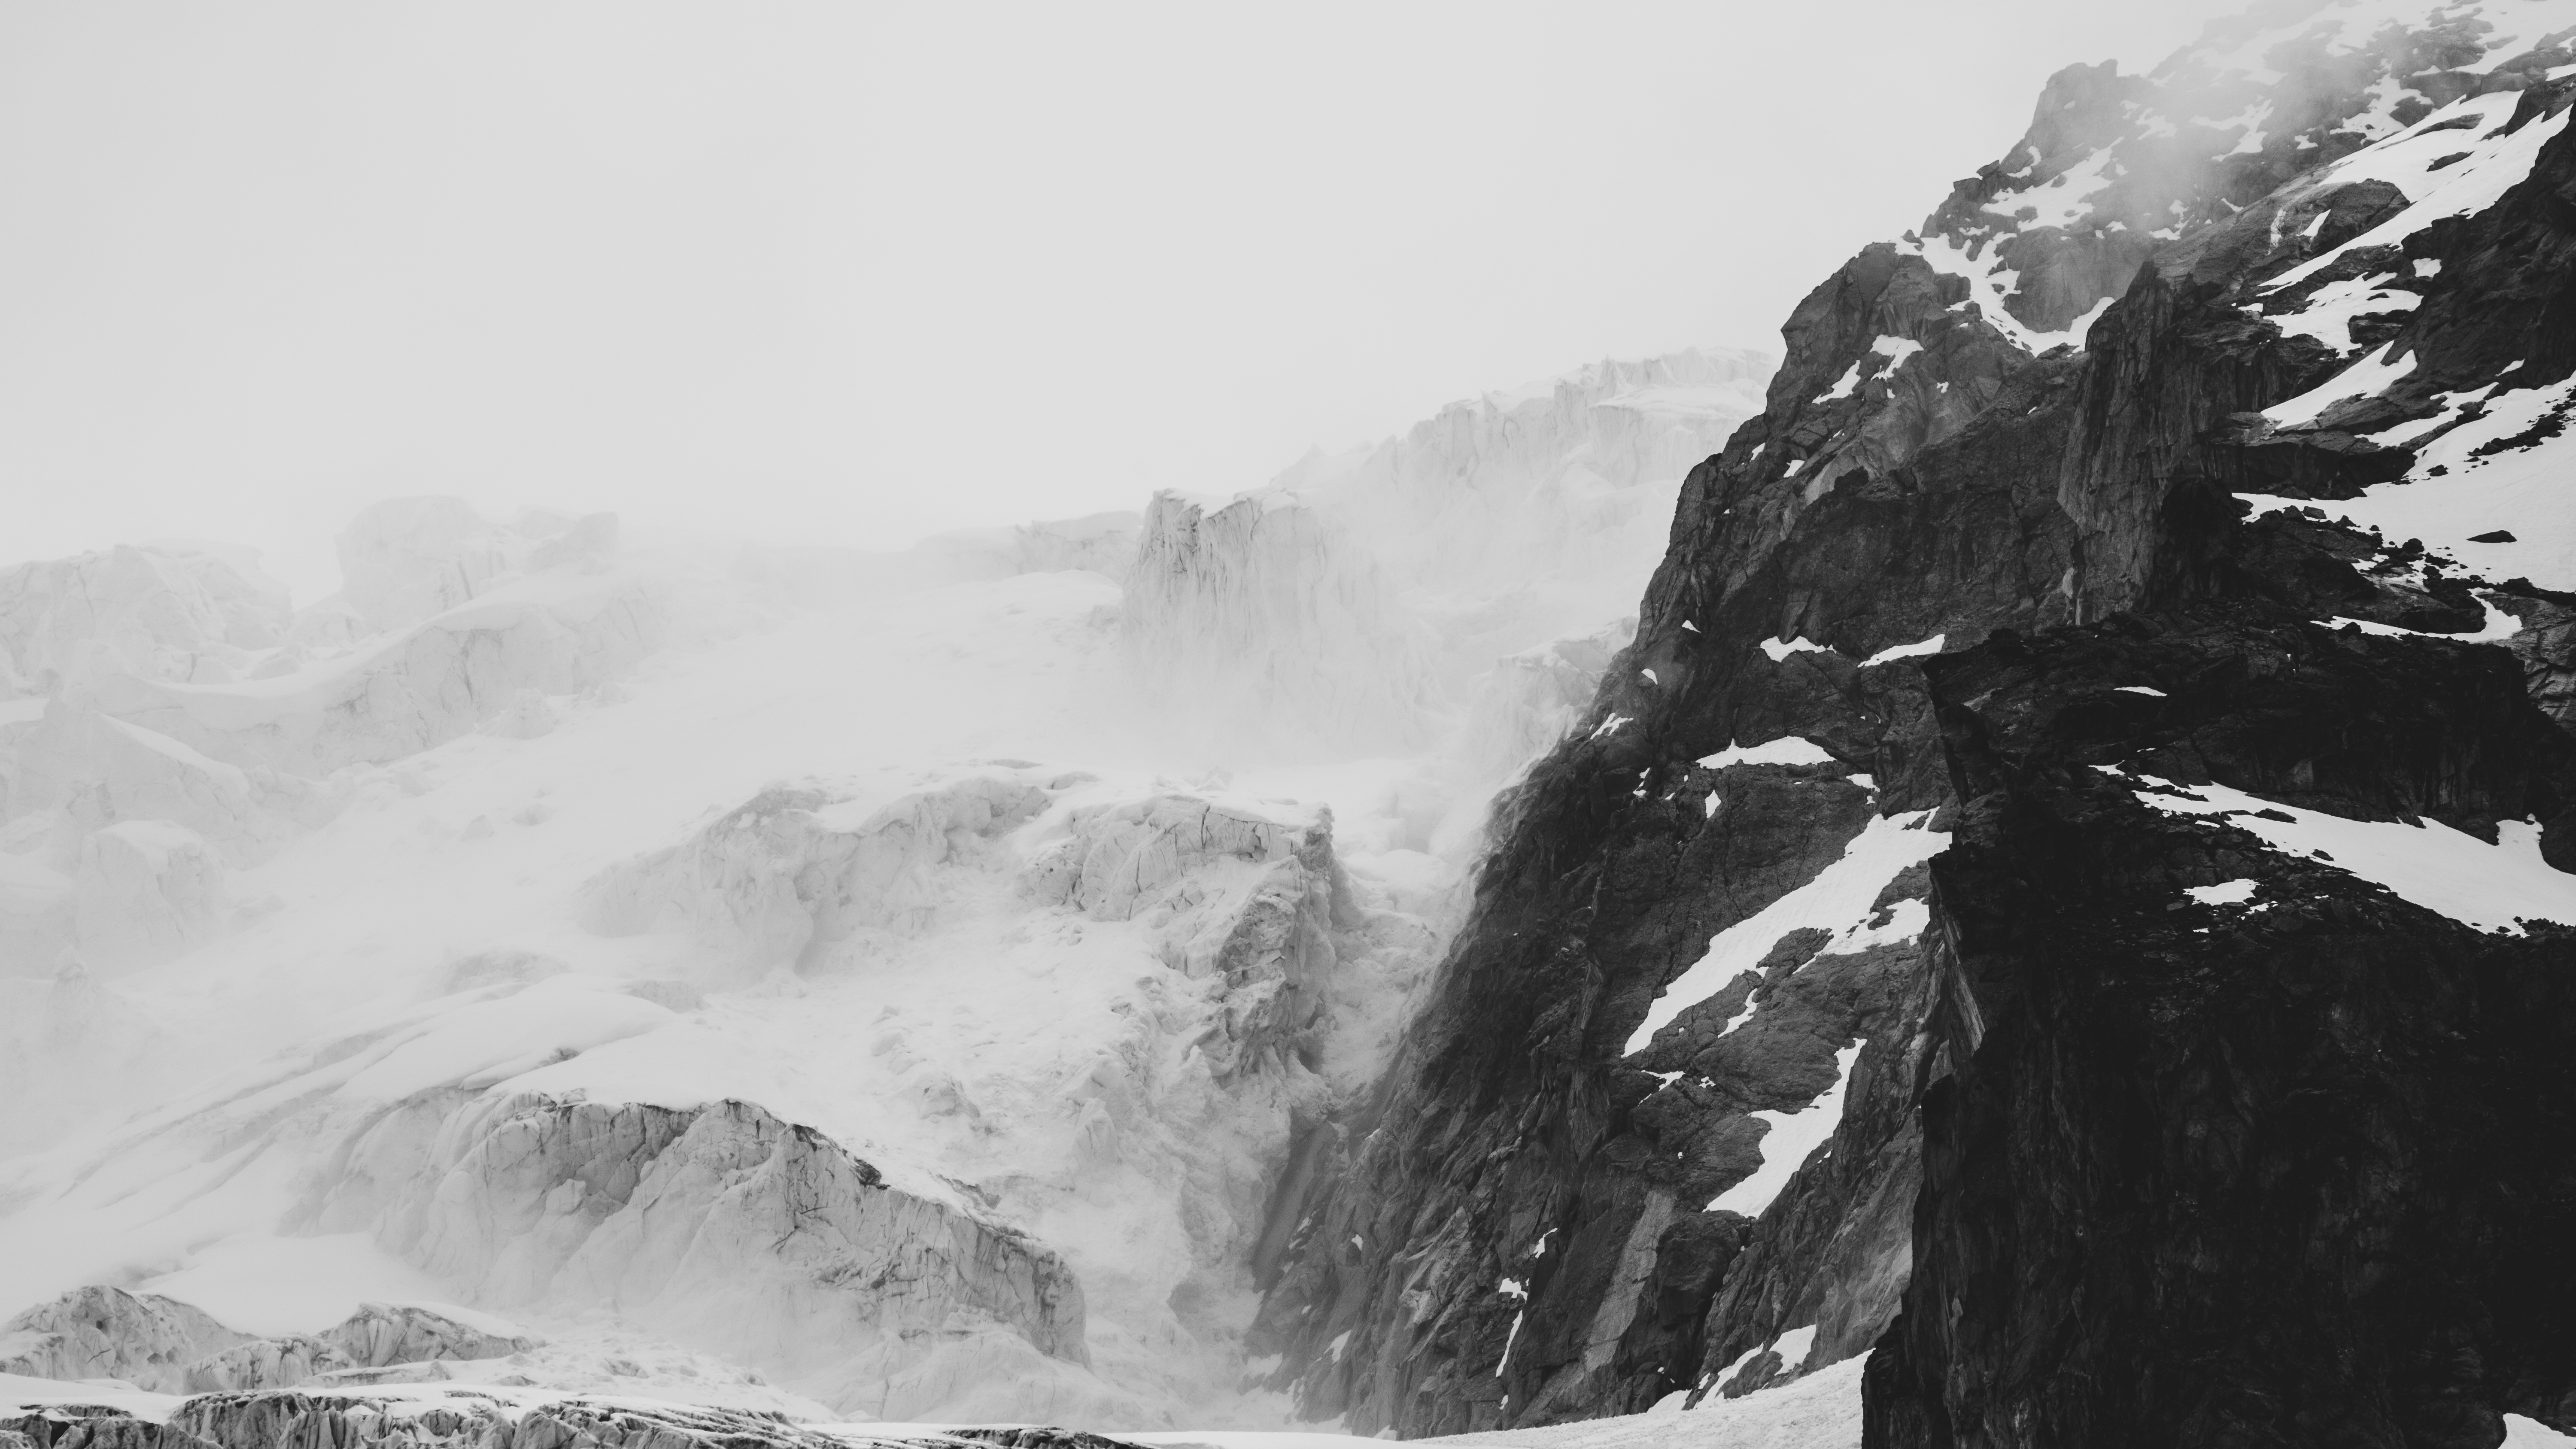 General 6000x3375 Switzerland mountains glacier monochrome nature landscape